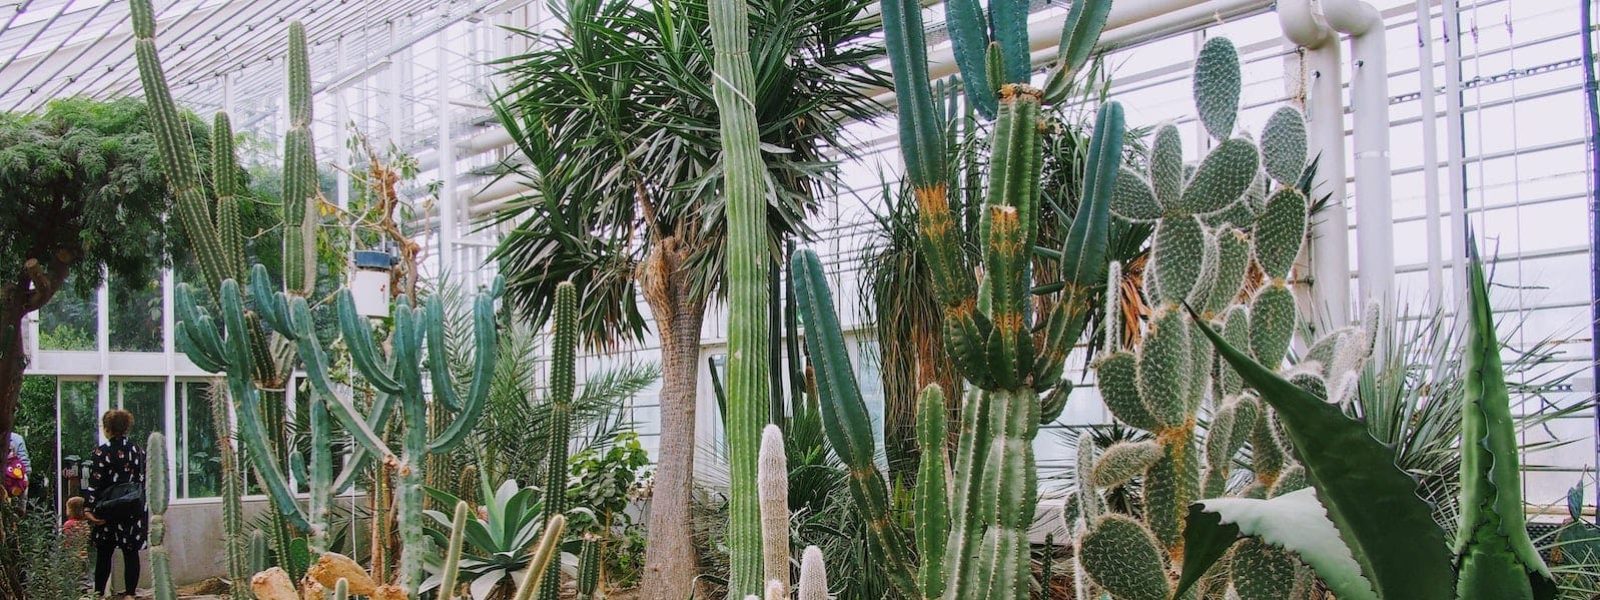 Botanische tuin palmbomen